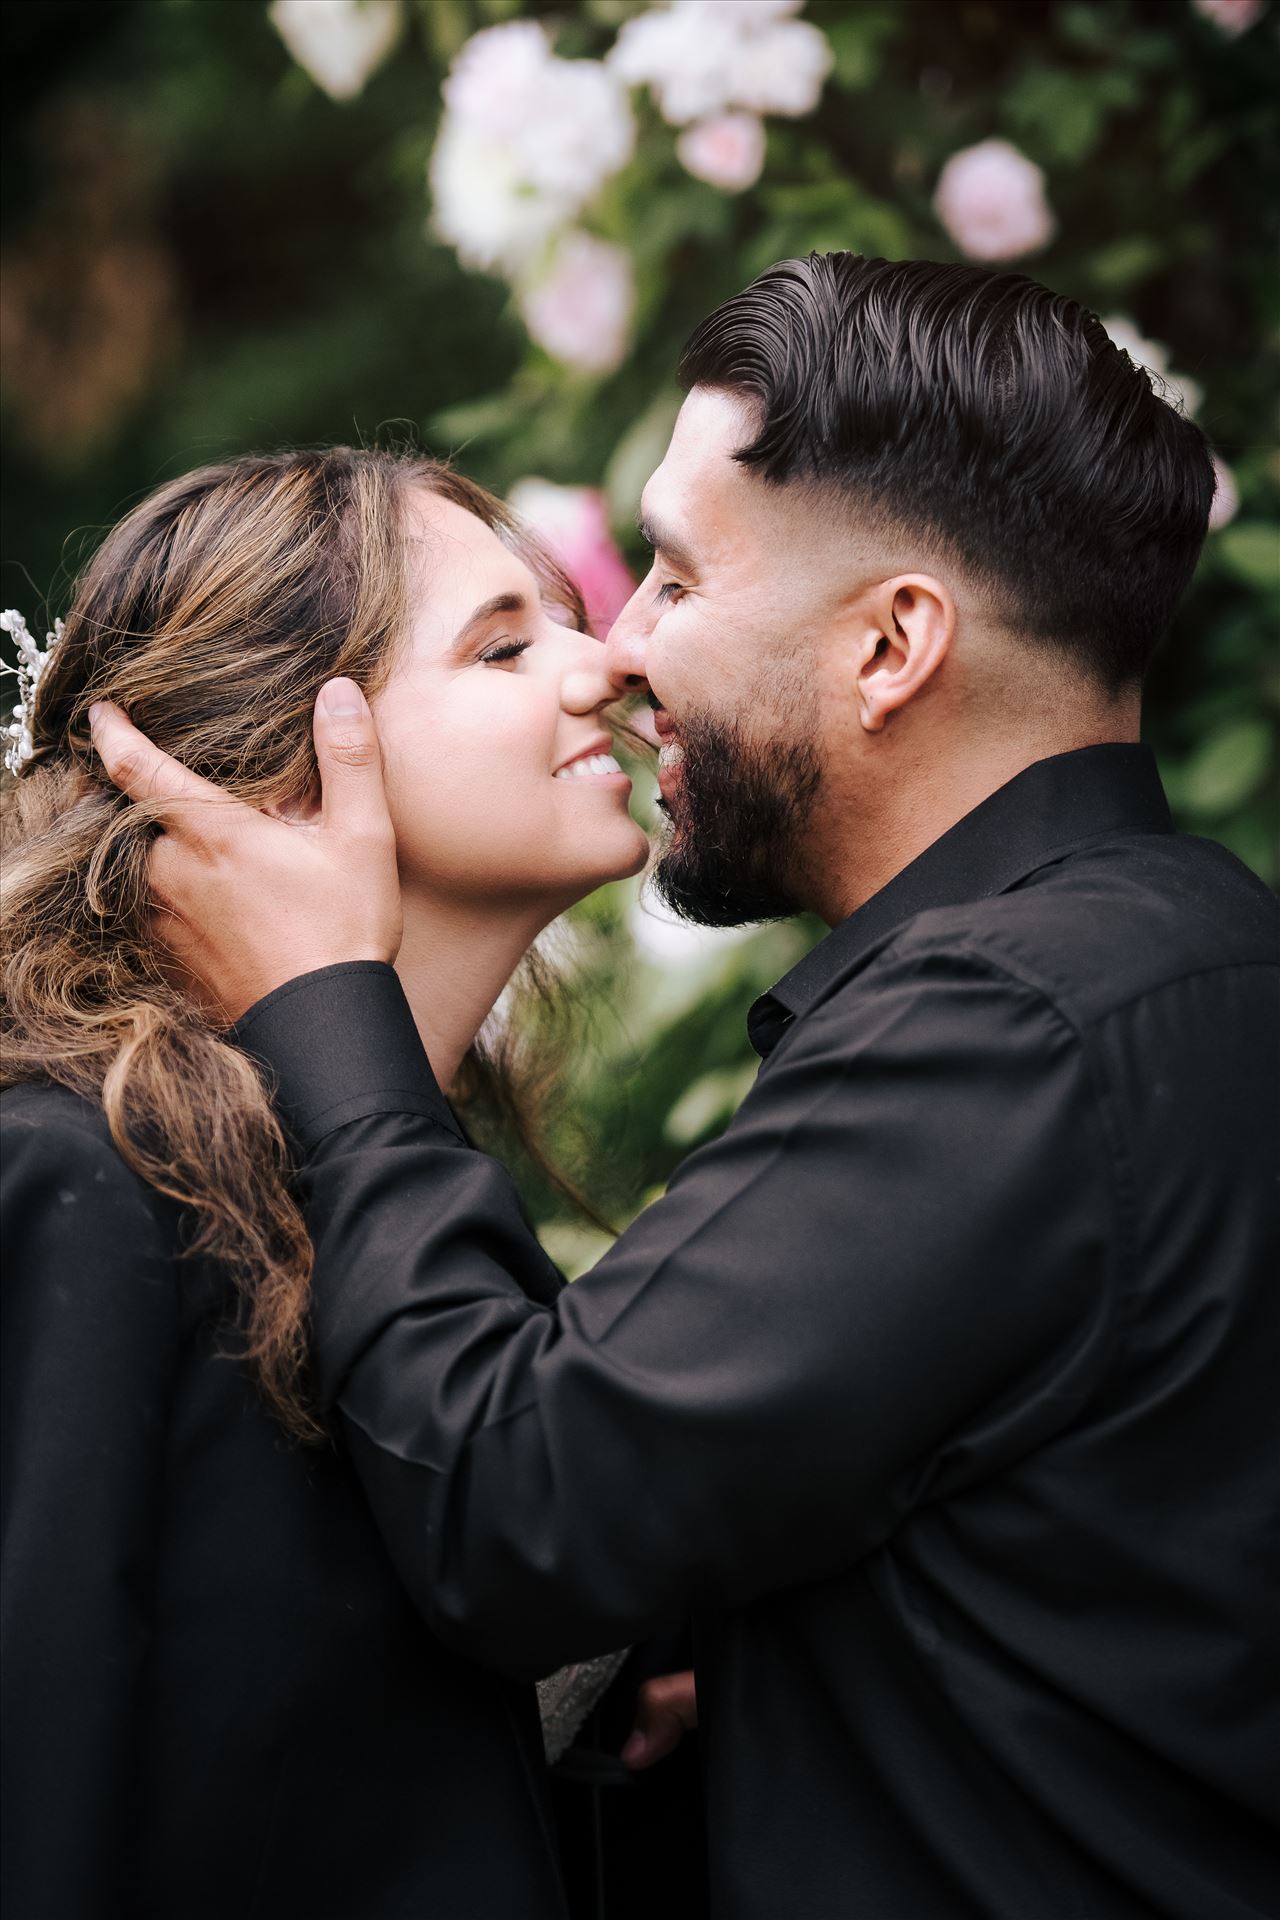 Final--3.JPG Mirror's Edge Photography San Luis Obispo and Santa Barbara County Wedding Photographer. Kaleidoscope Inn and Gardens Wedding. Bride and Groom Romantic Kiss. by Sarah Williams